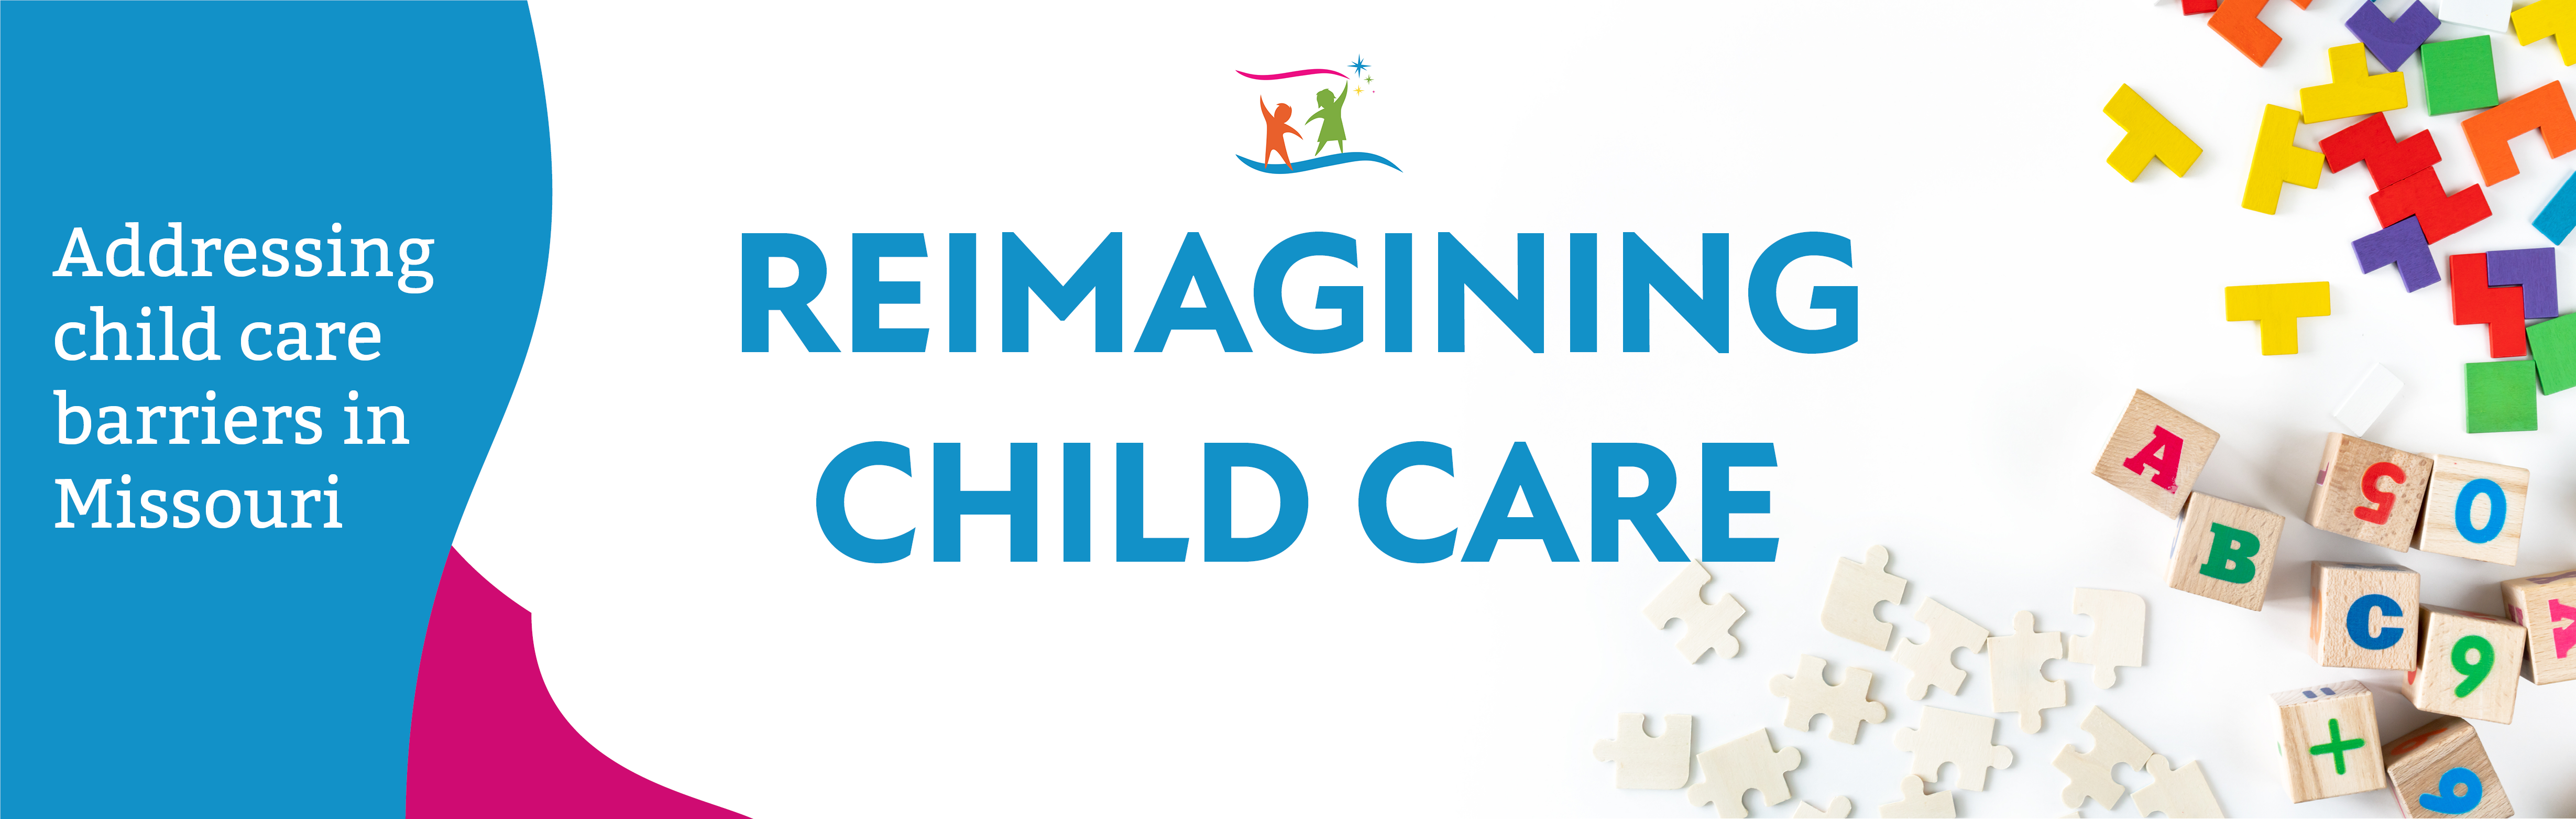 Reimagining Child Care - Addressing child care barriers in Missouri